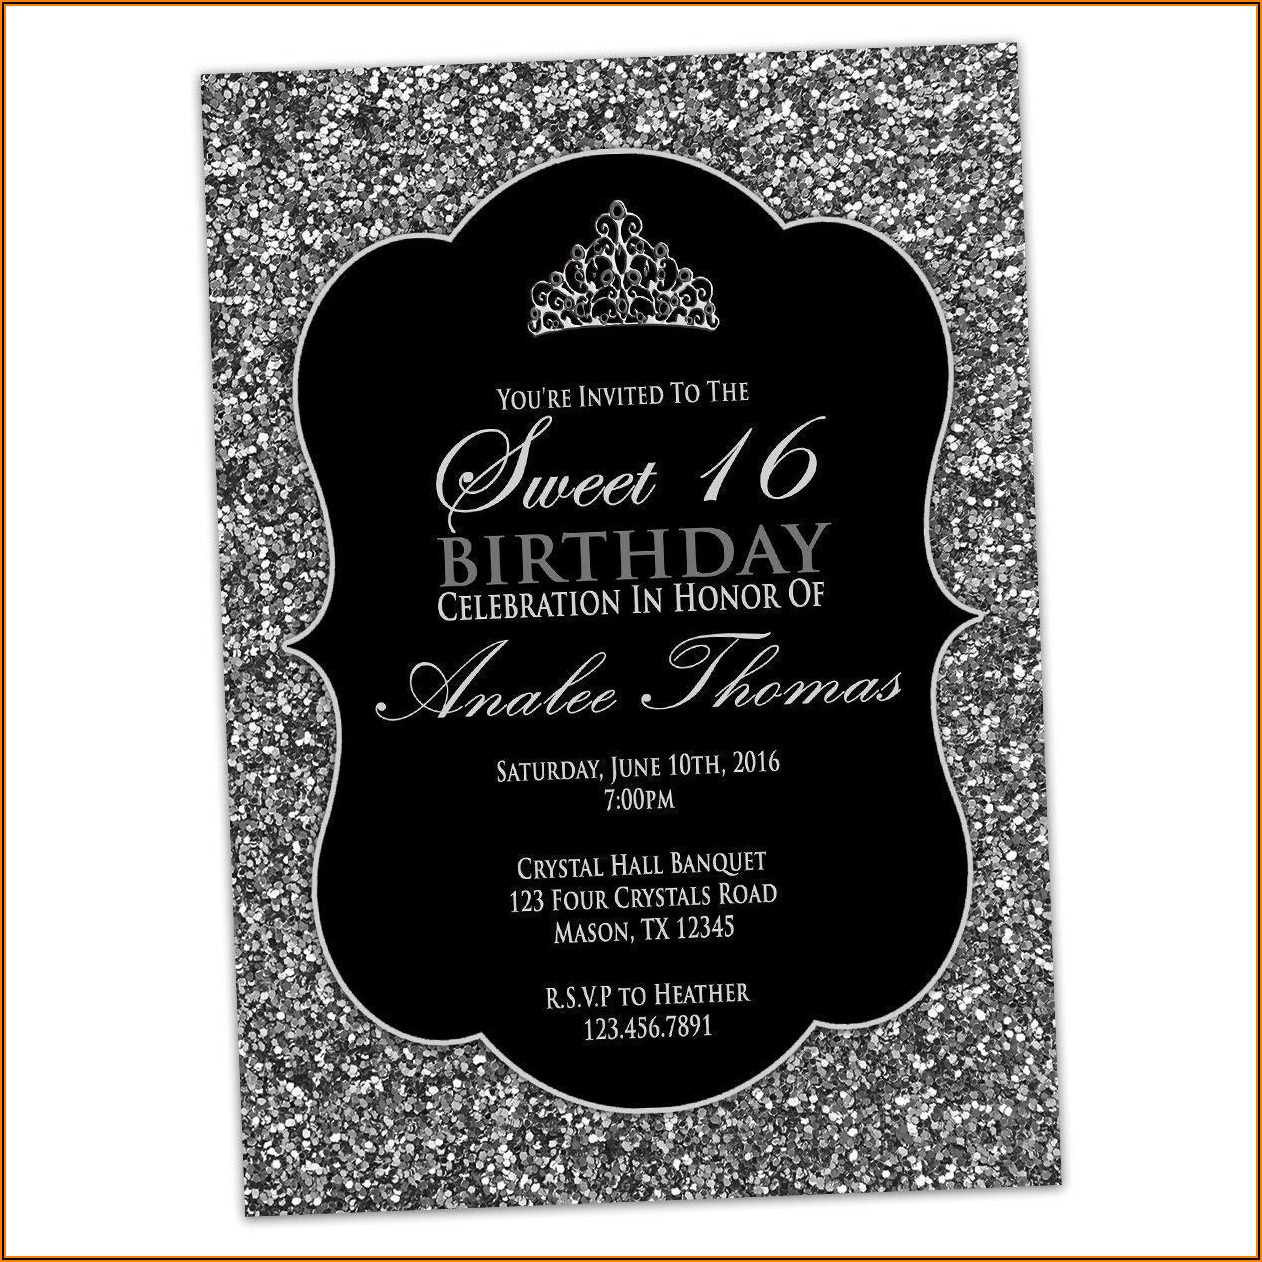 Sweet 16 Invitations Under $1